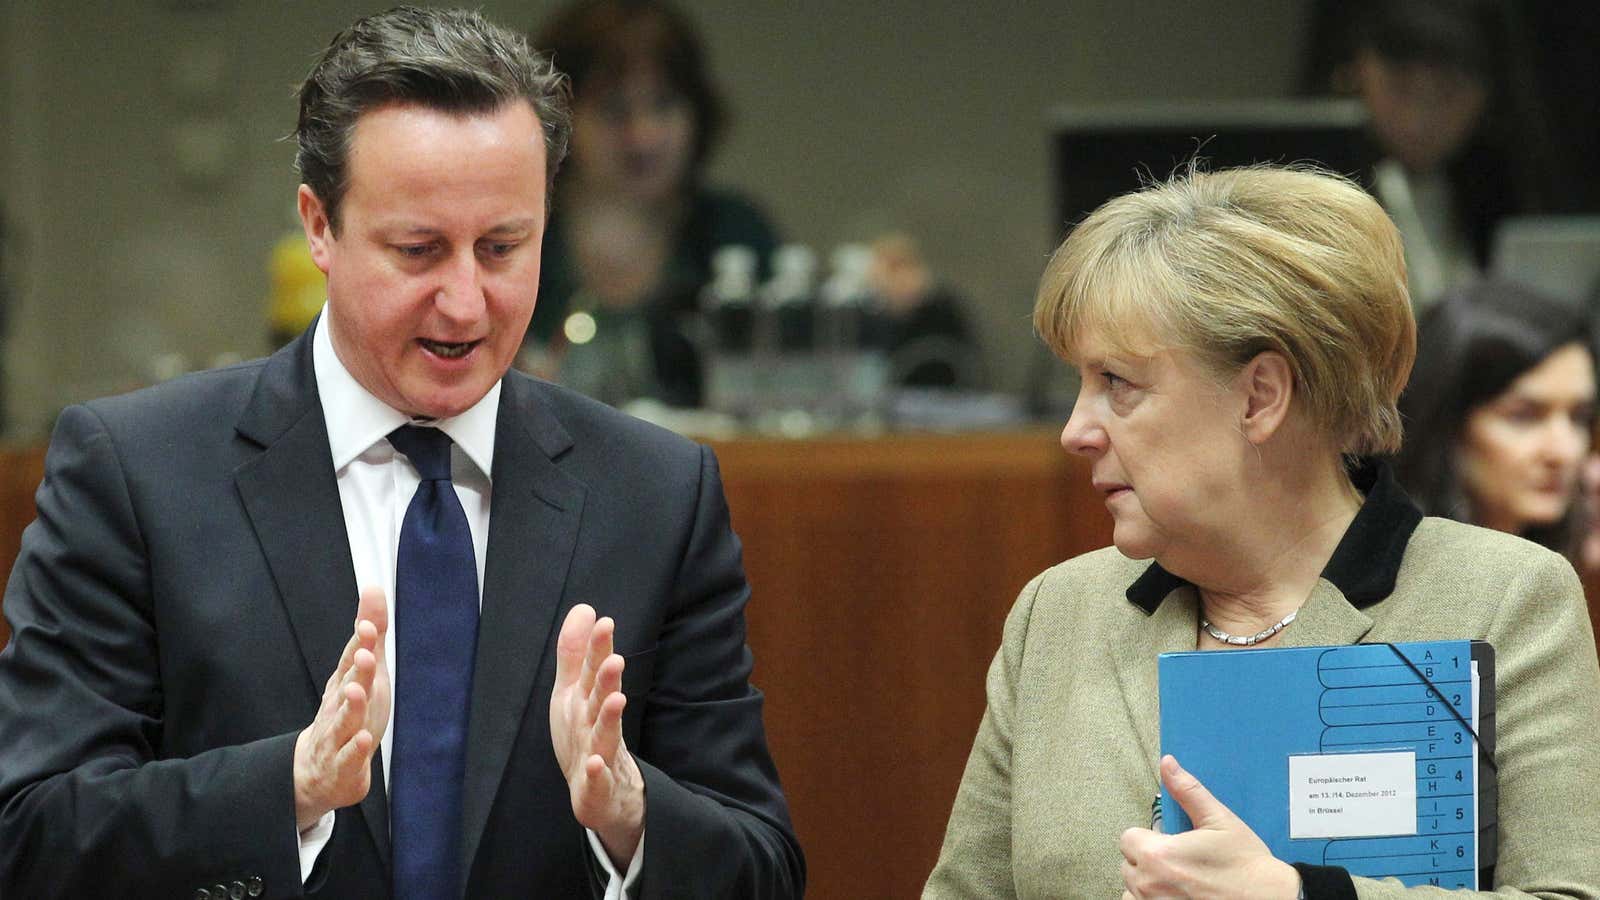 David Cameron shows Angela Merkel his plan for making the EU a little smaller.